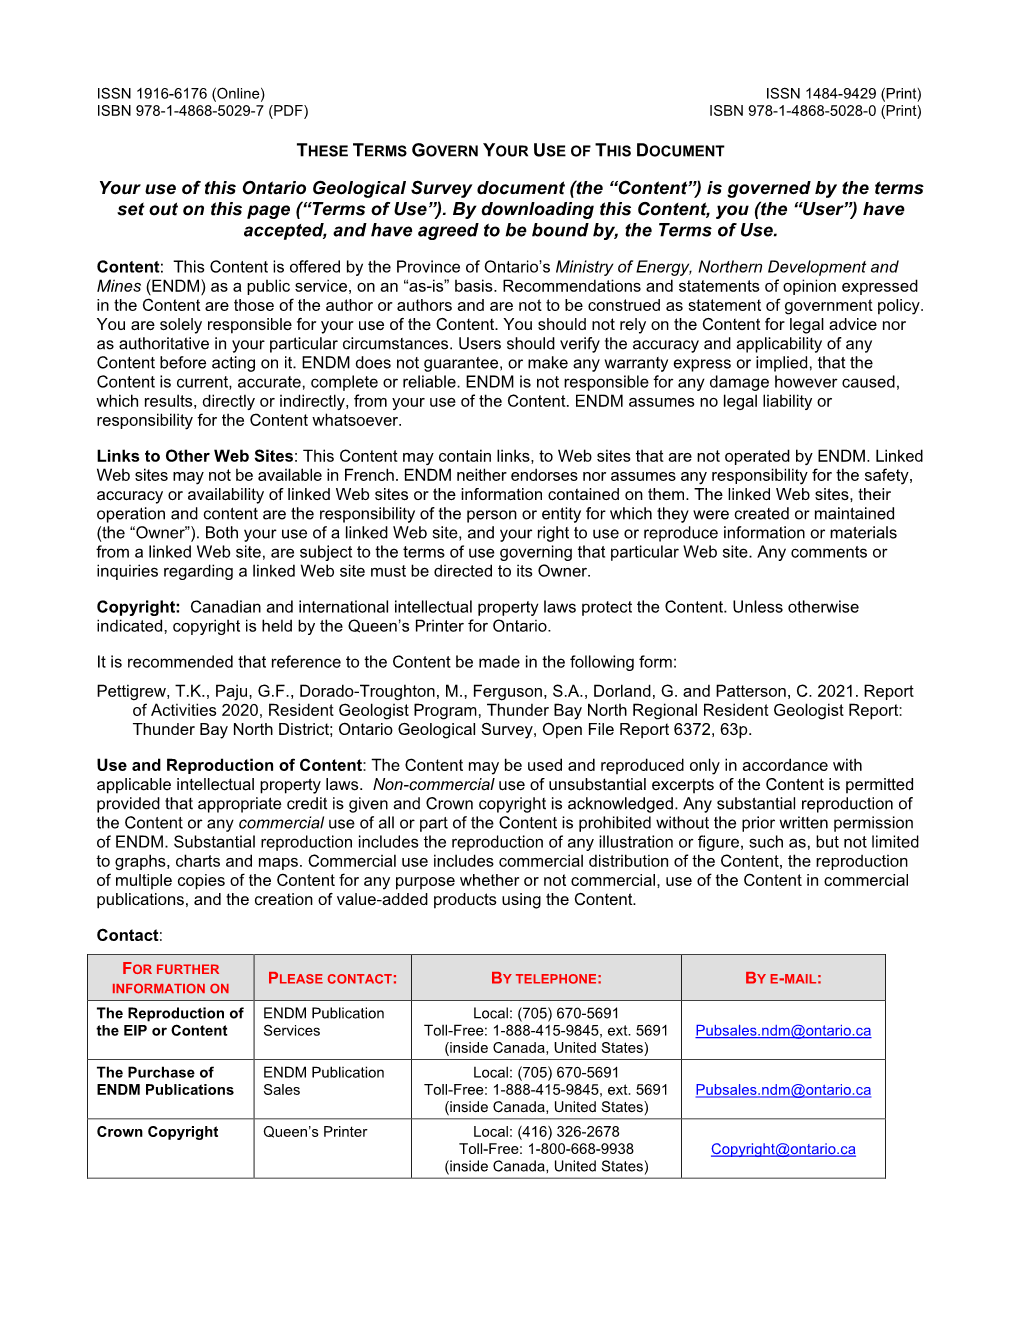 Report of Activities 2020, Resident Geologist Program, Thunder Bay